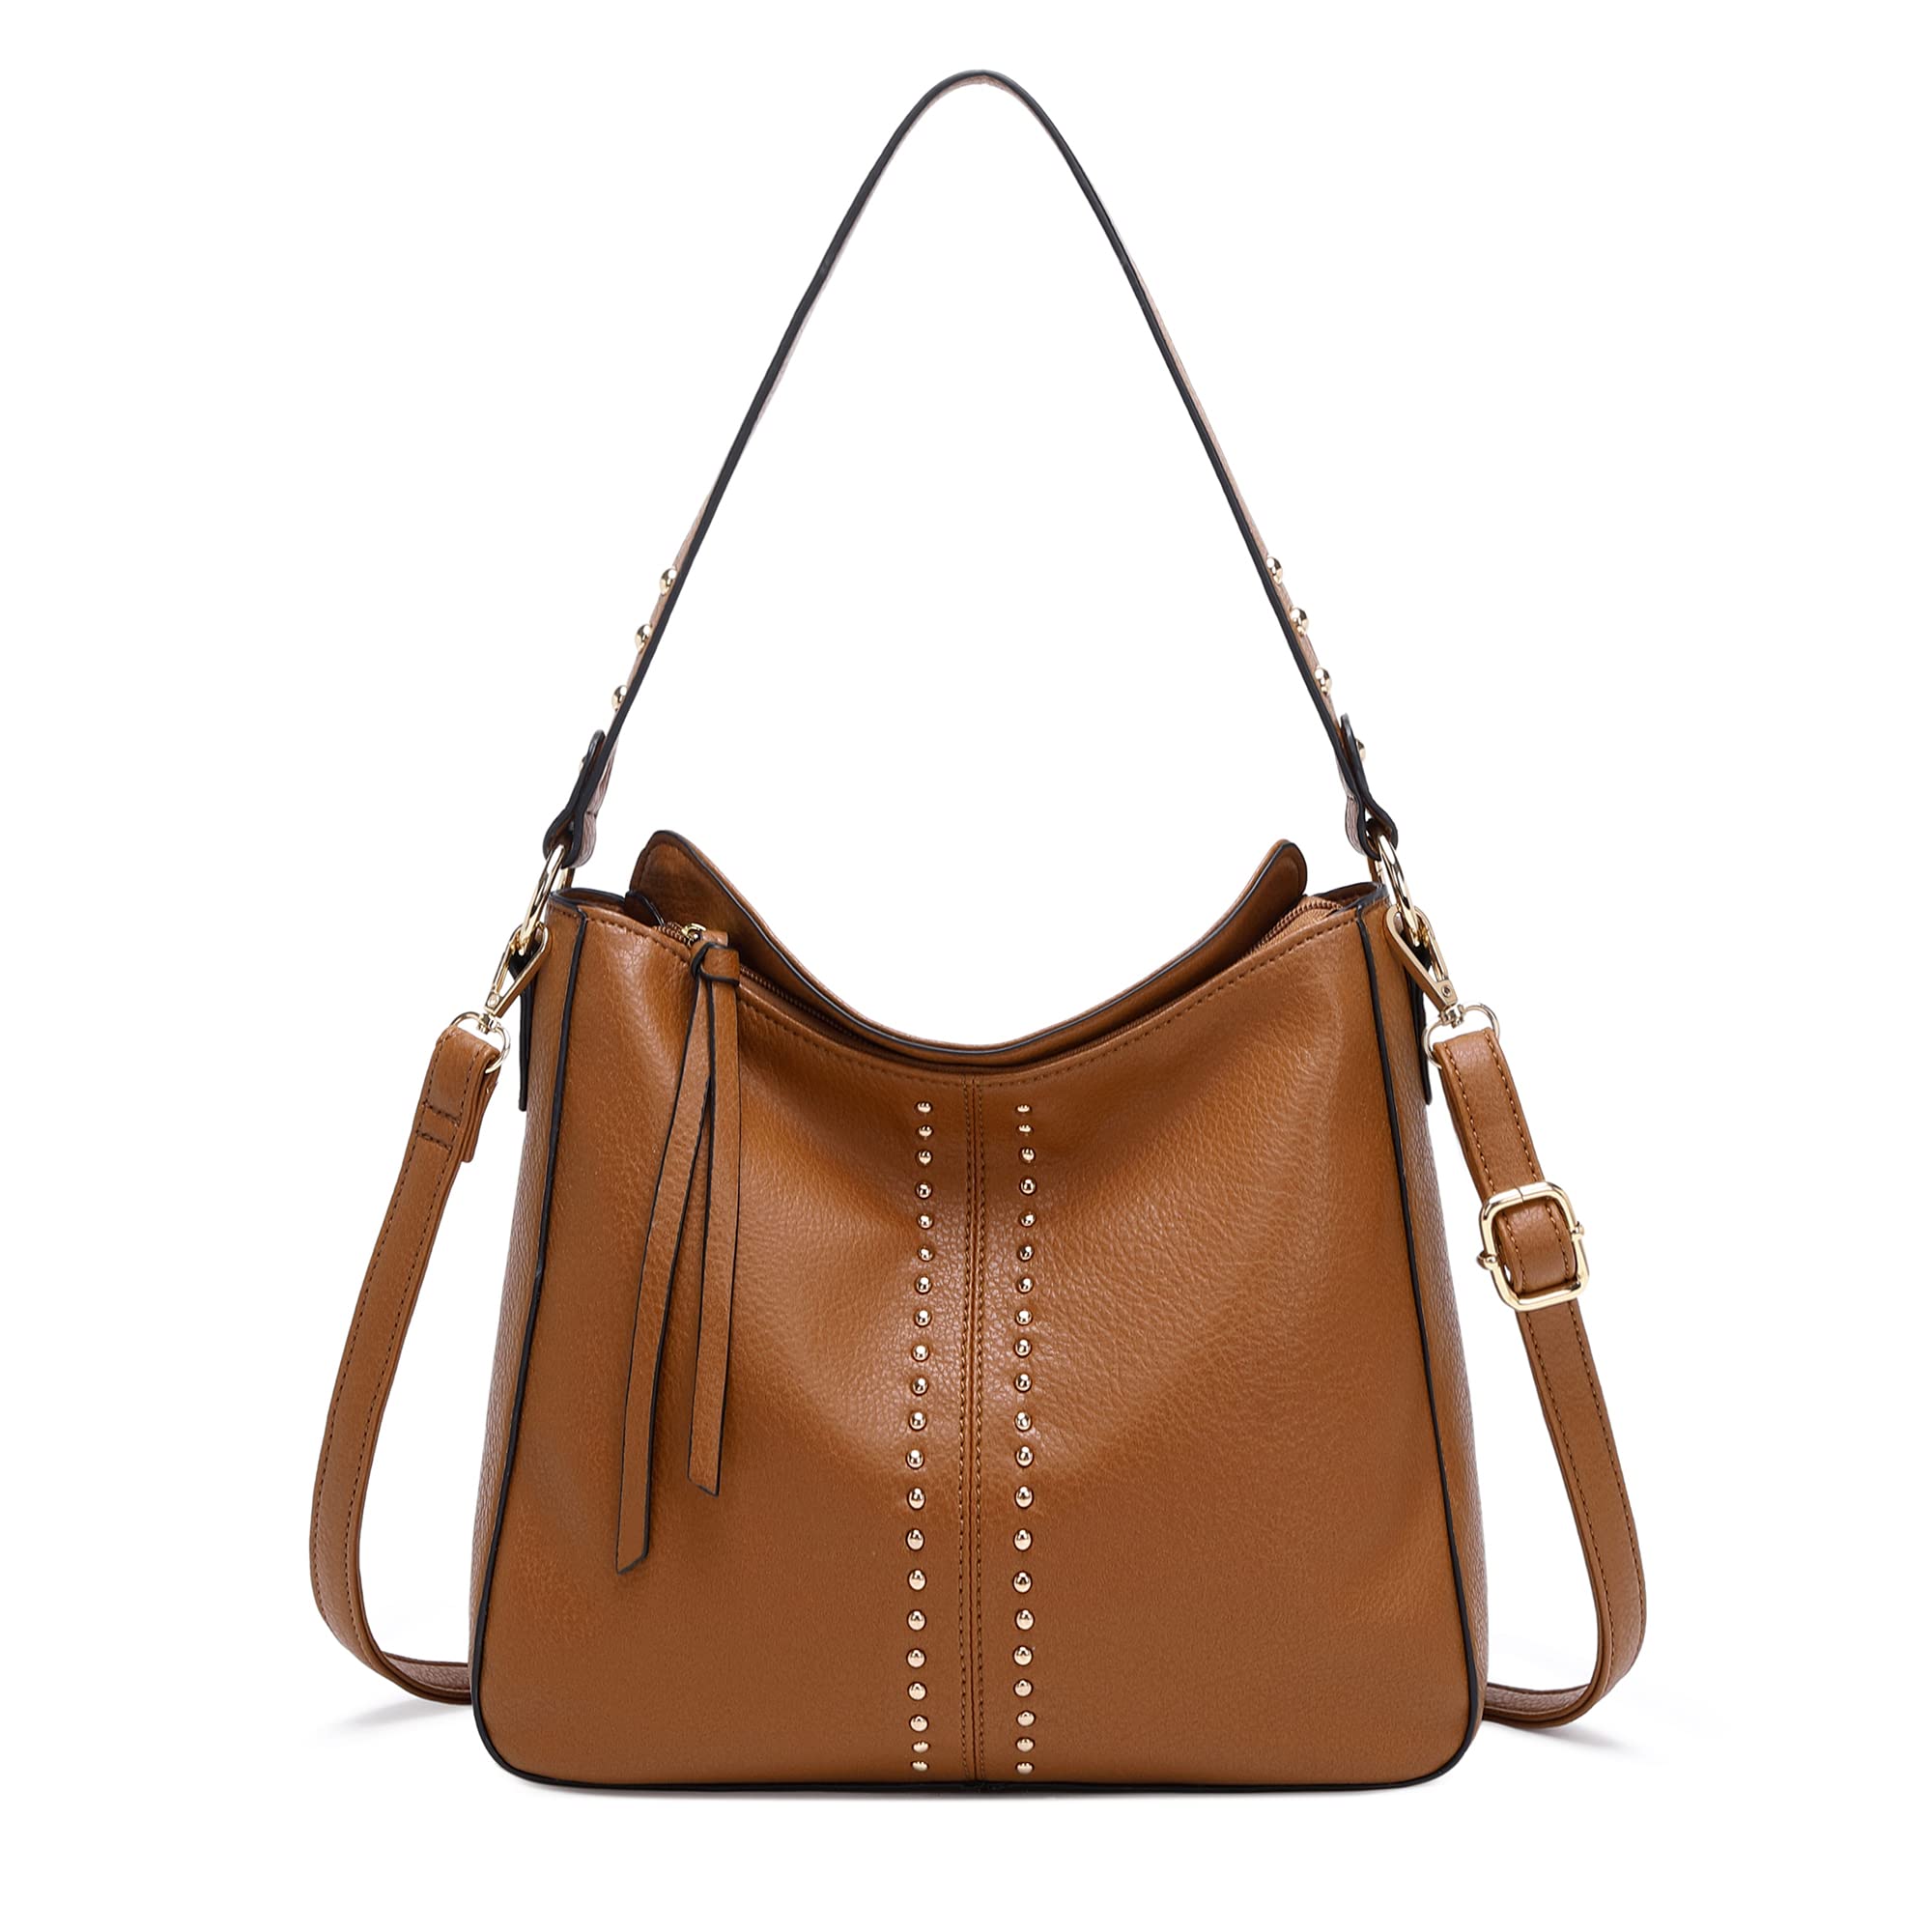 Montana West Hobo Bag for Women Handbags Crossbody Leather Purse Ladies Chic Shoulder Bag